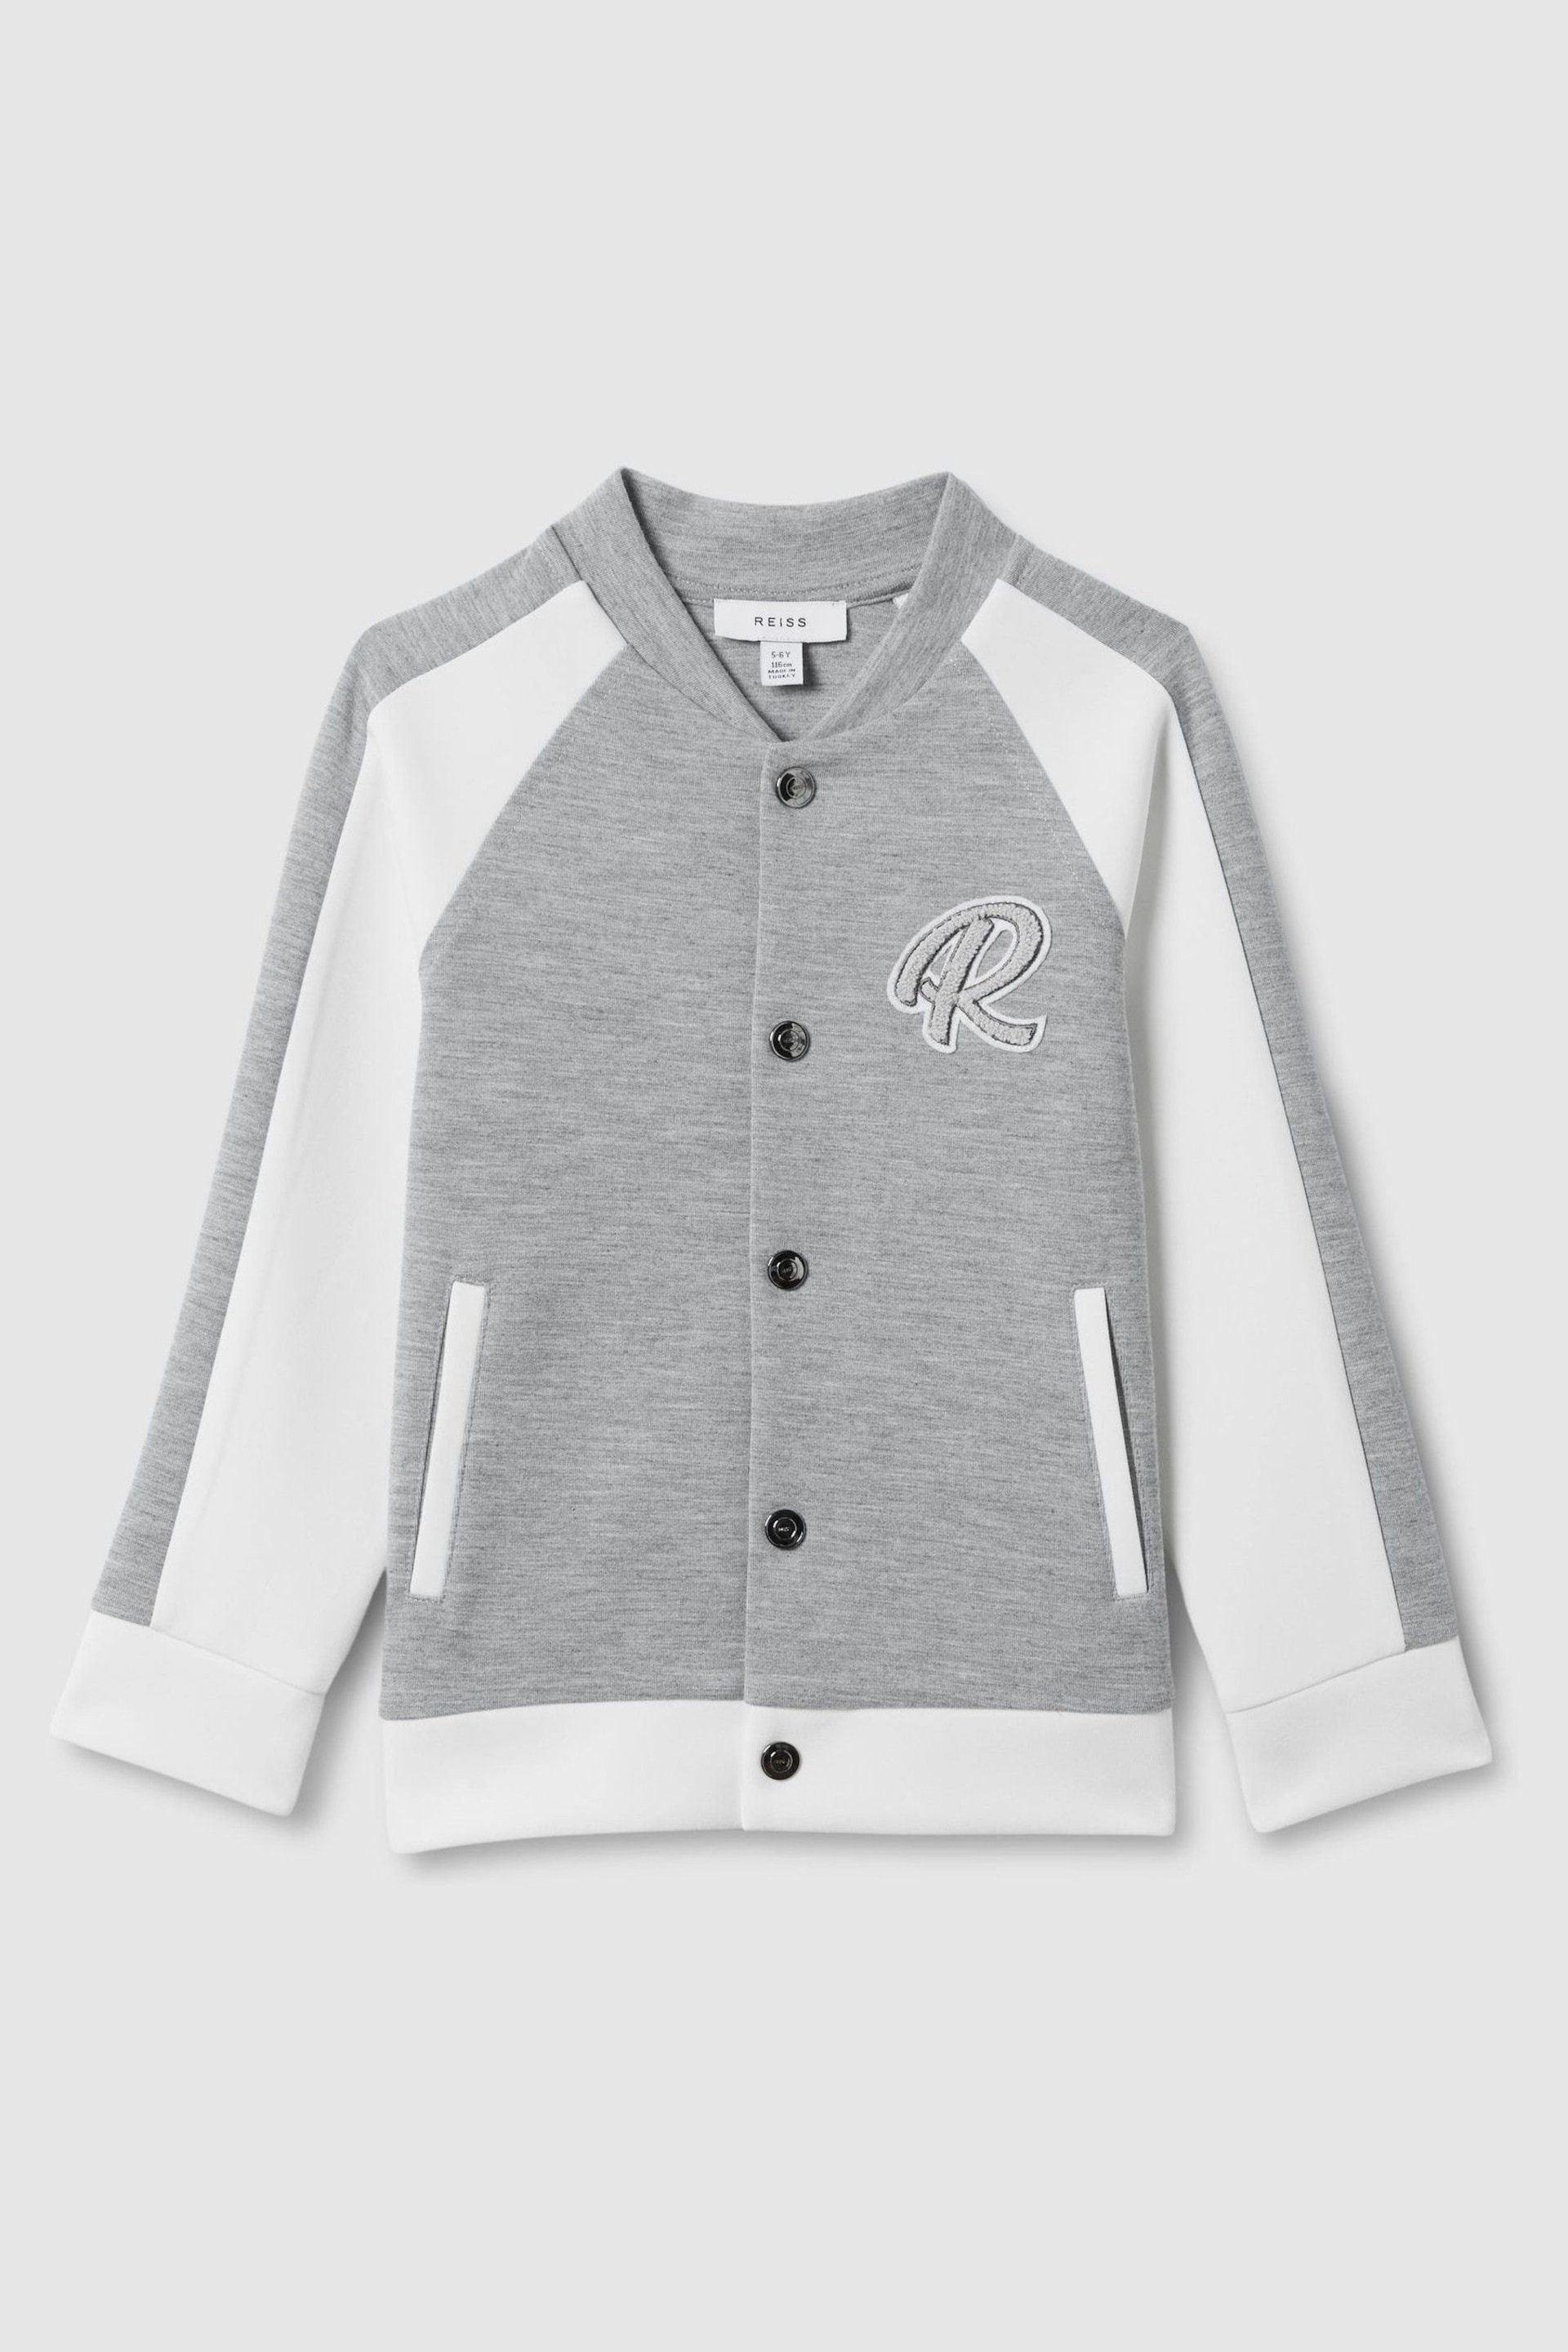 Reiss Soft Grey/White Pelham Senior Jersey Varsity Jacket - Image 2 of 6